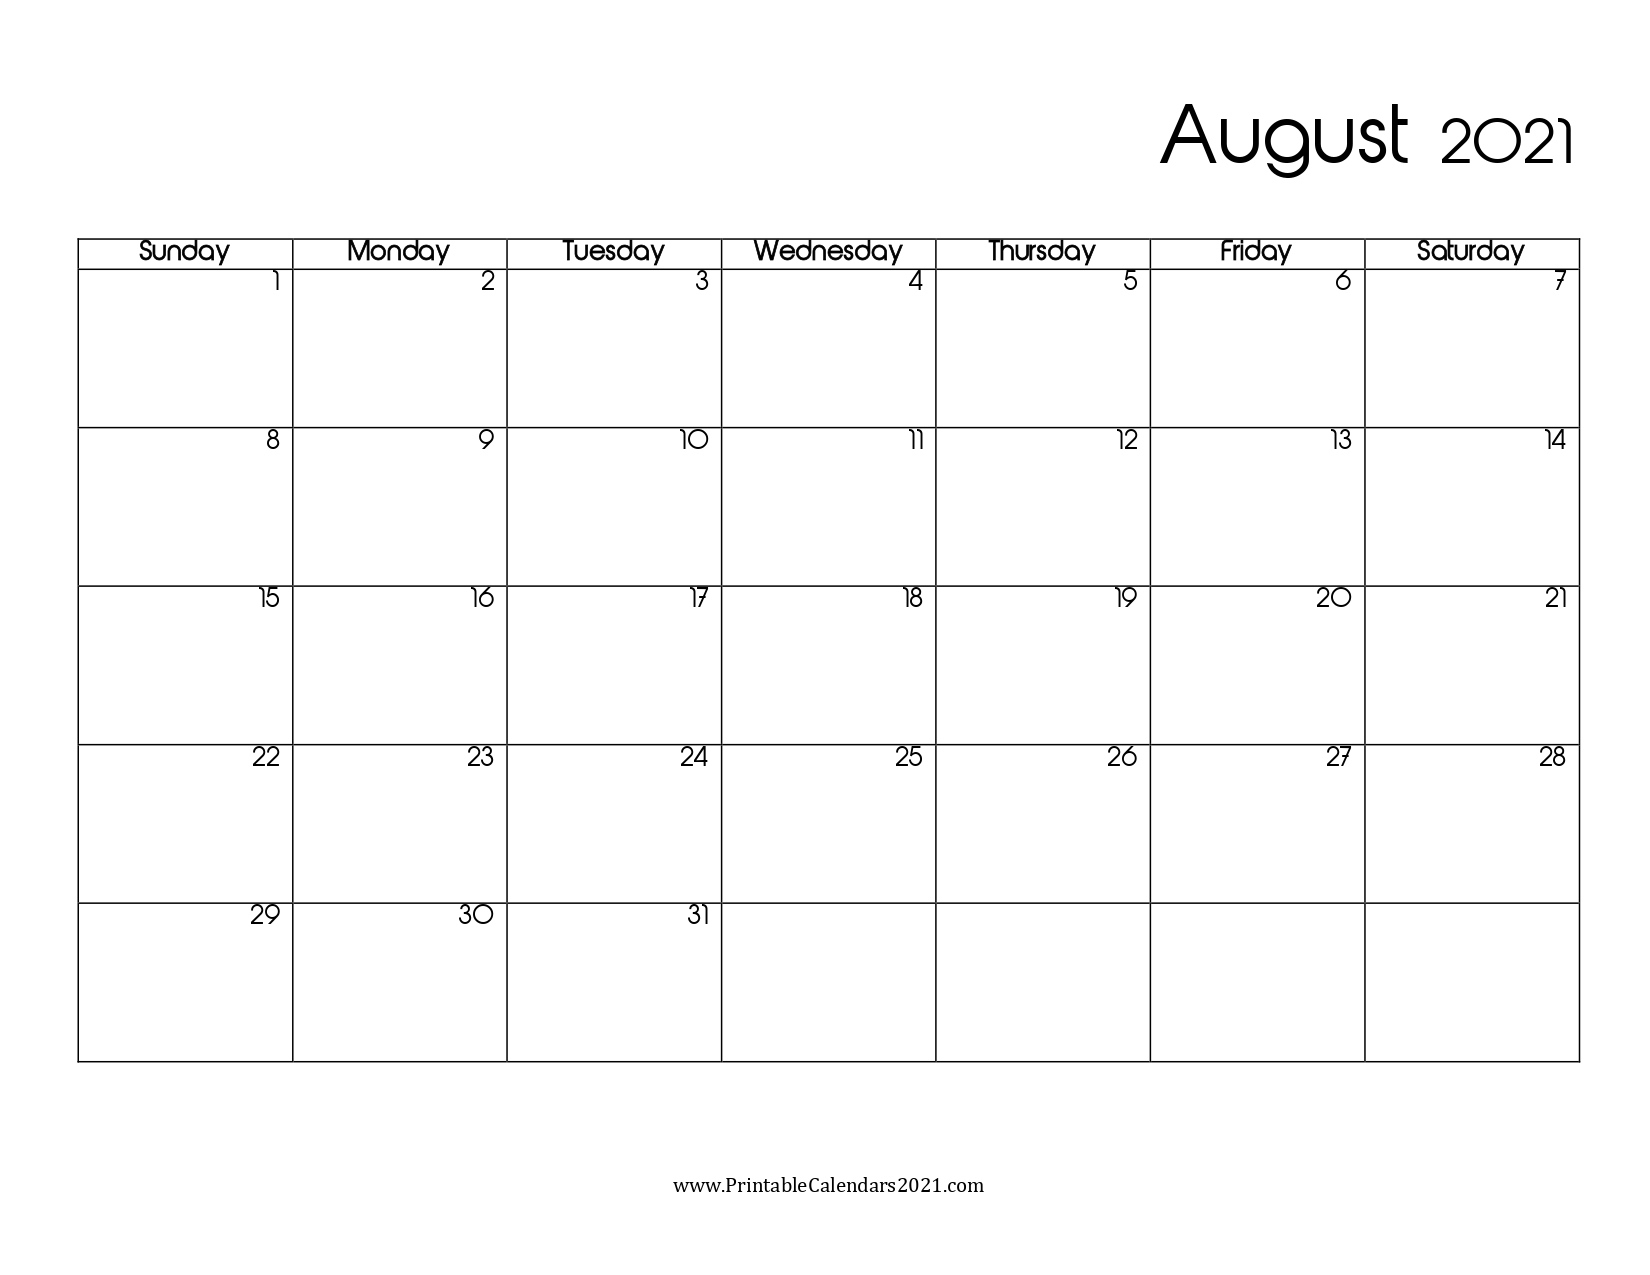 44+ August 2021 Calendar Printable, August 2021 Blank Calendar Pdf August 2021 Calendar Quotes